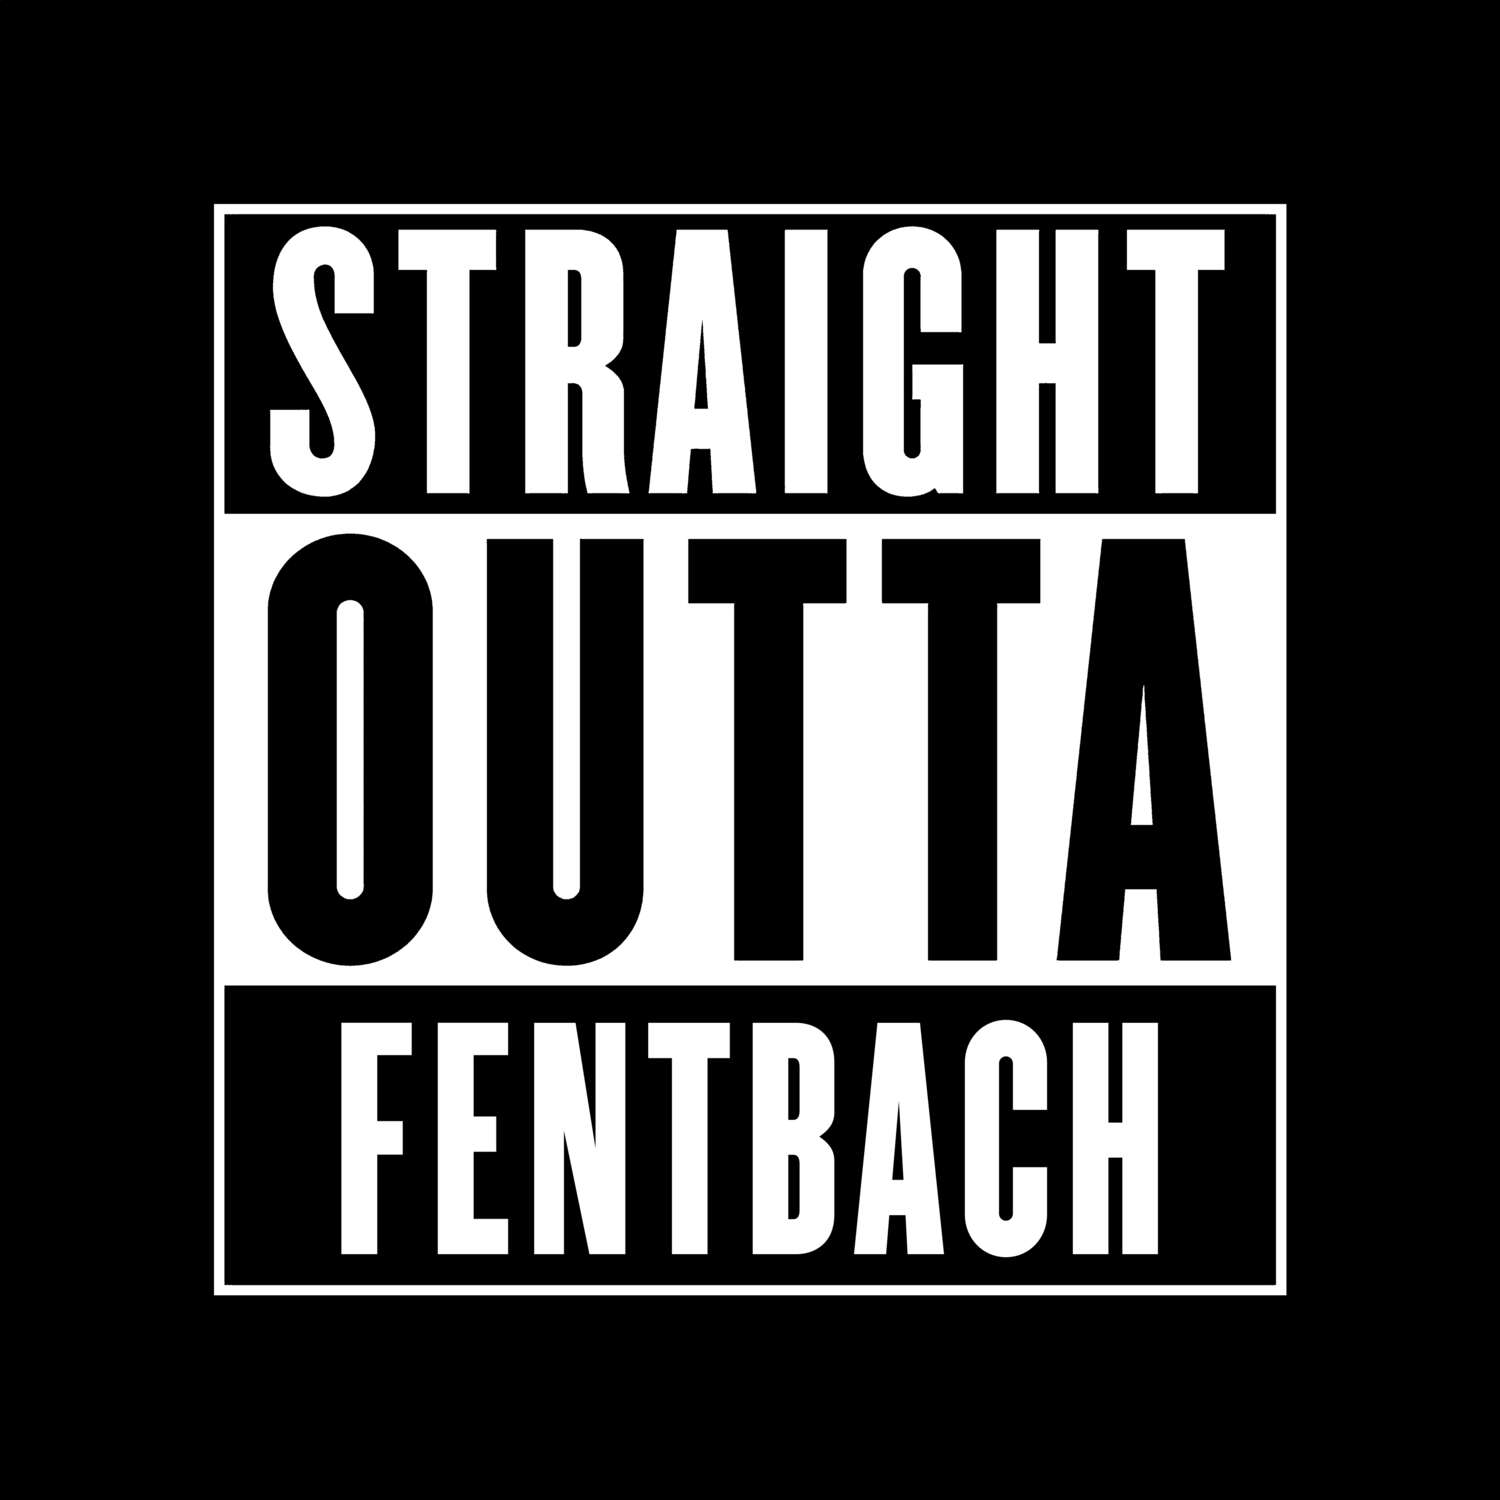 Fentbach T-Shirt »Straight Outta«